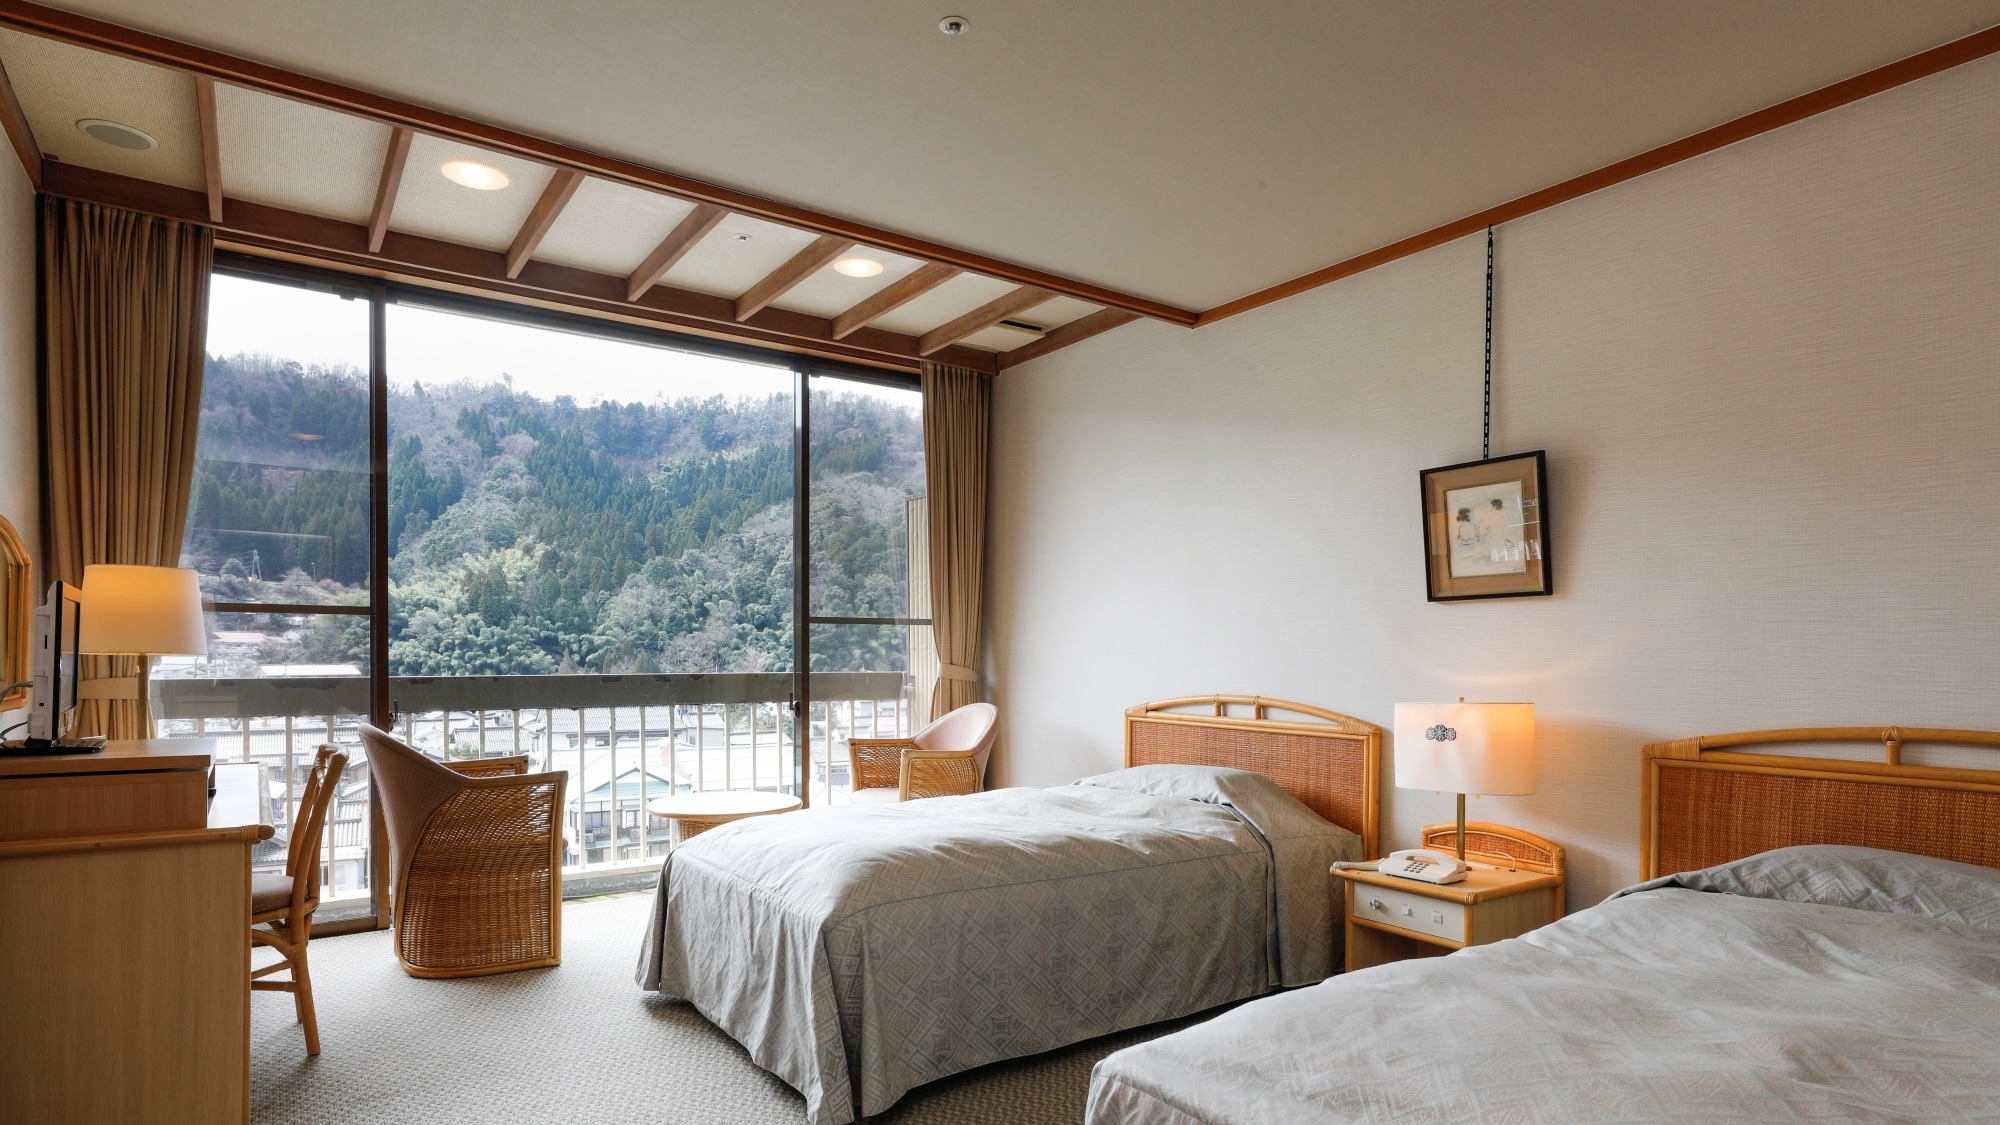 ■ Special room "Wakatake" bedroom